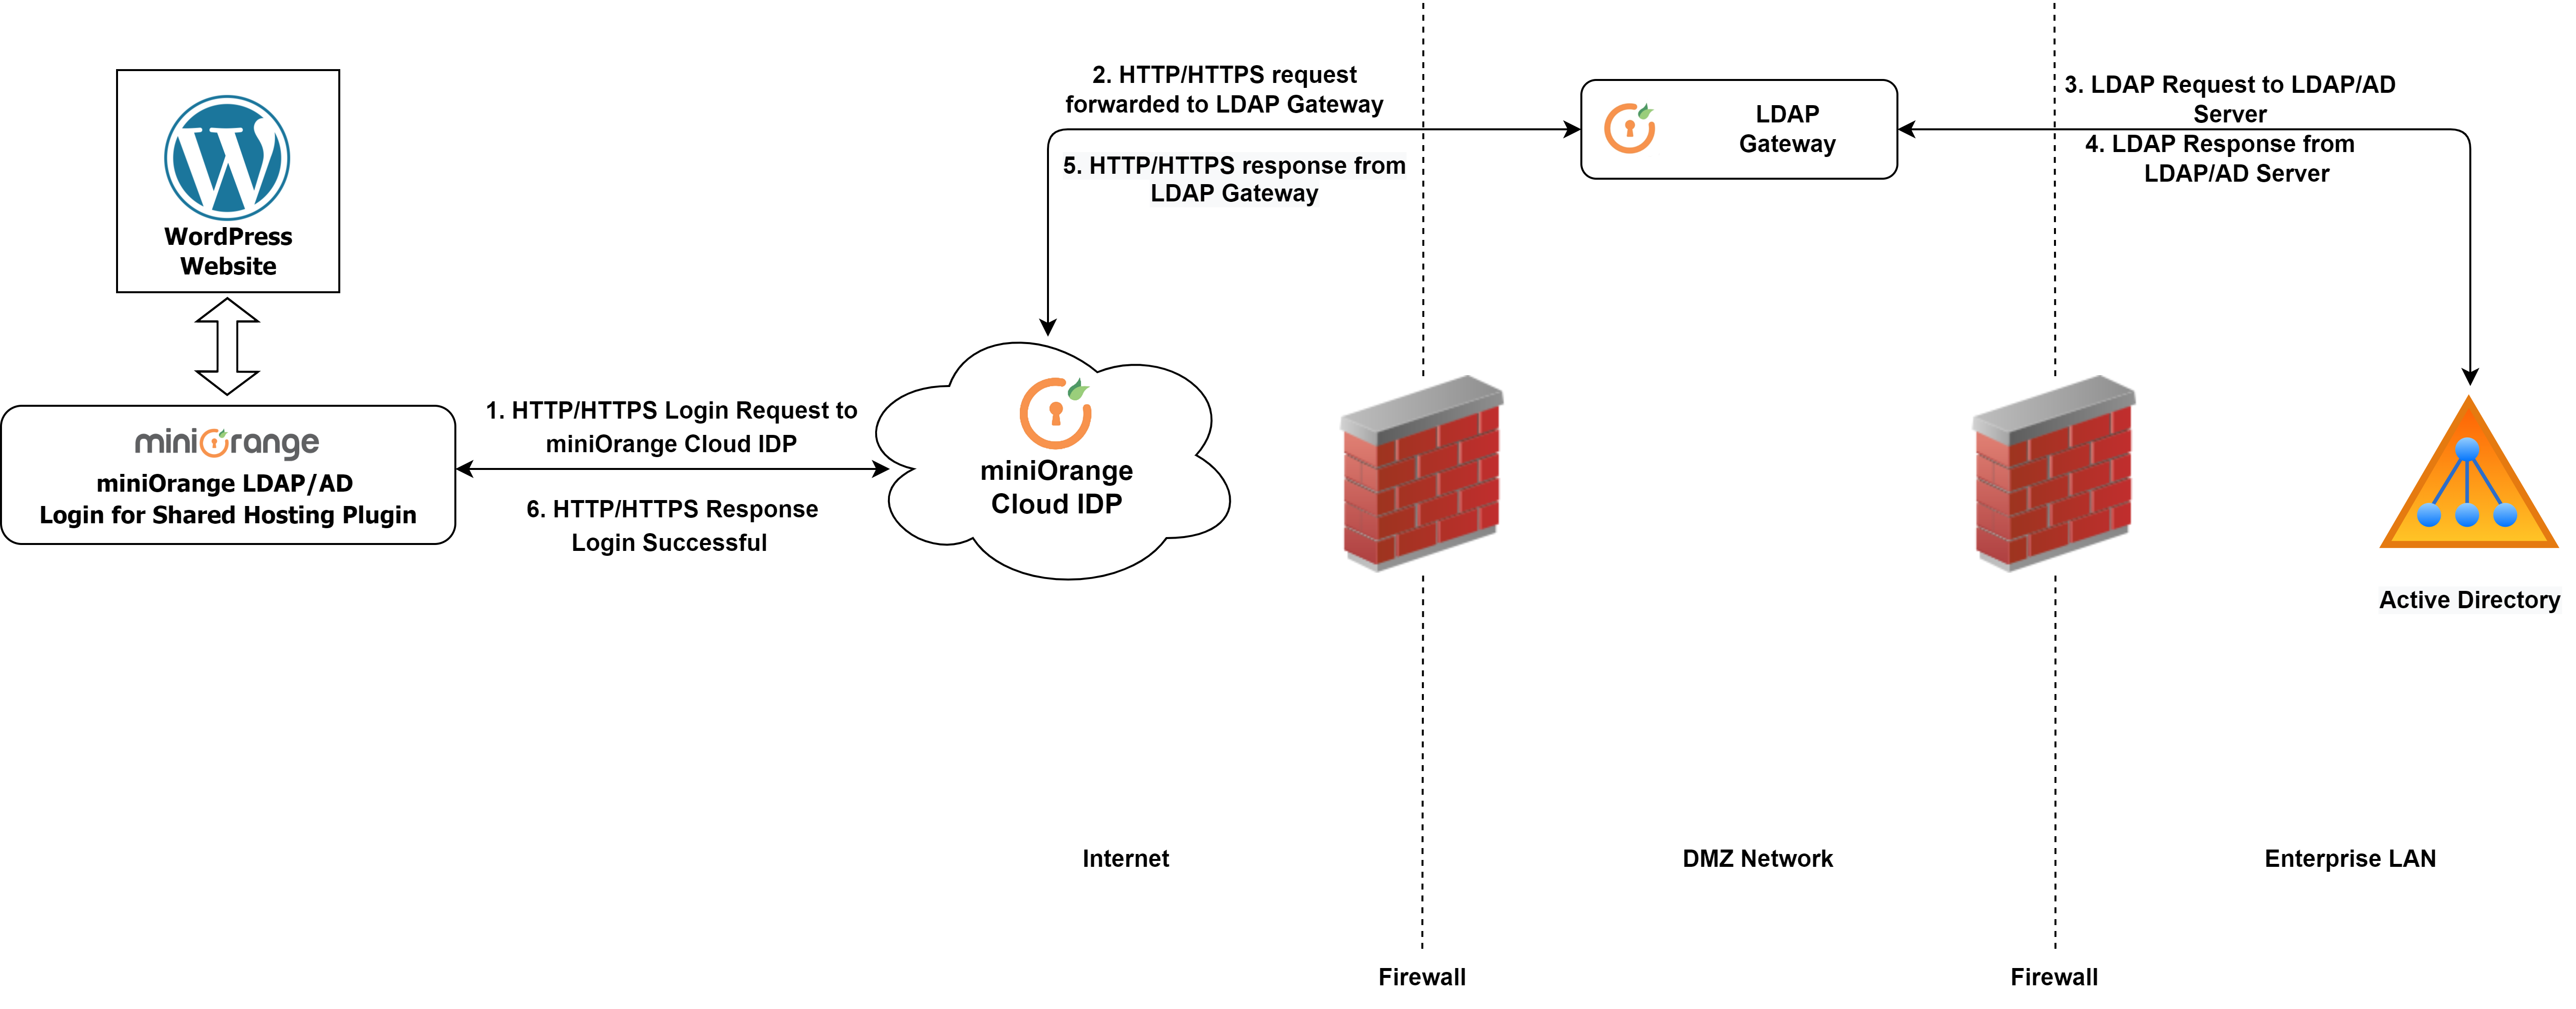 WordPress miniOrange Architecture of LDAP Gateway to setup Cloud / LDAP/AD Login For Shared Hosting Environment Plugin